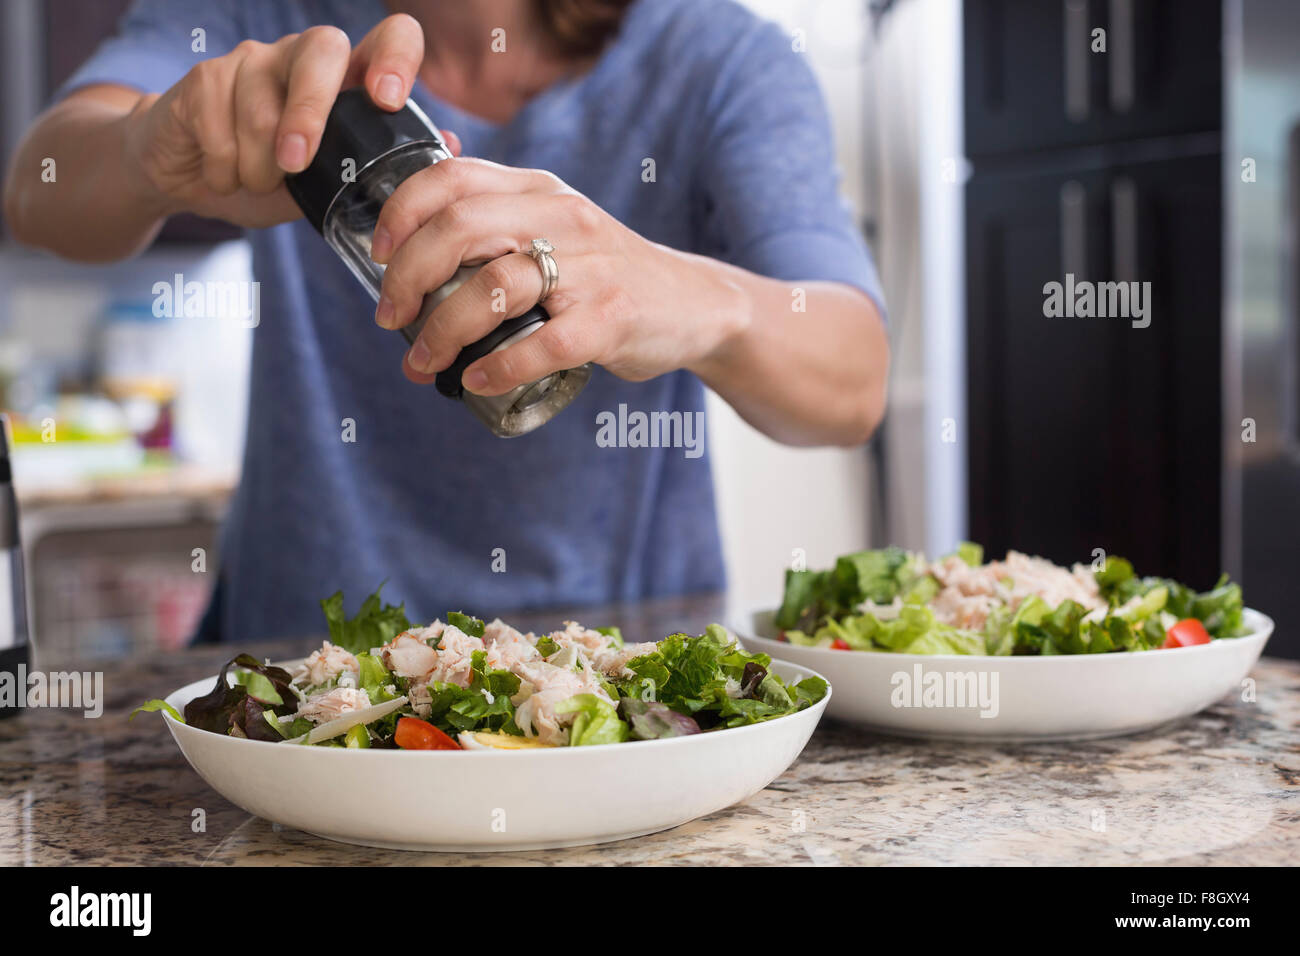 Mixed race woman seasoning salad Stock Photo